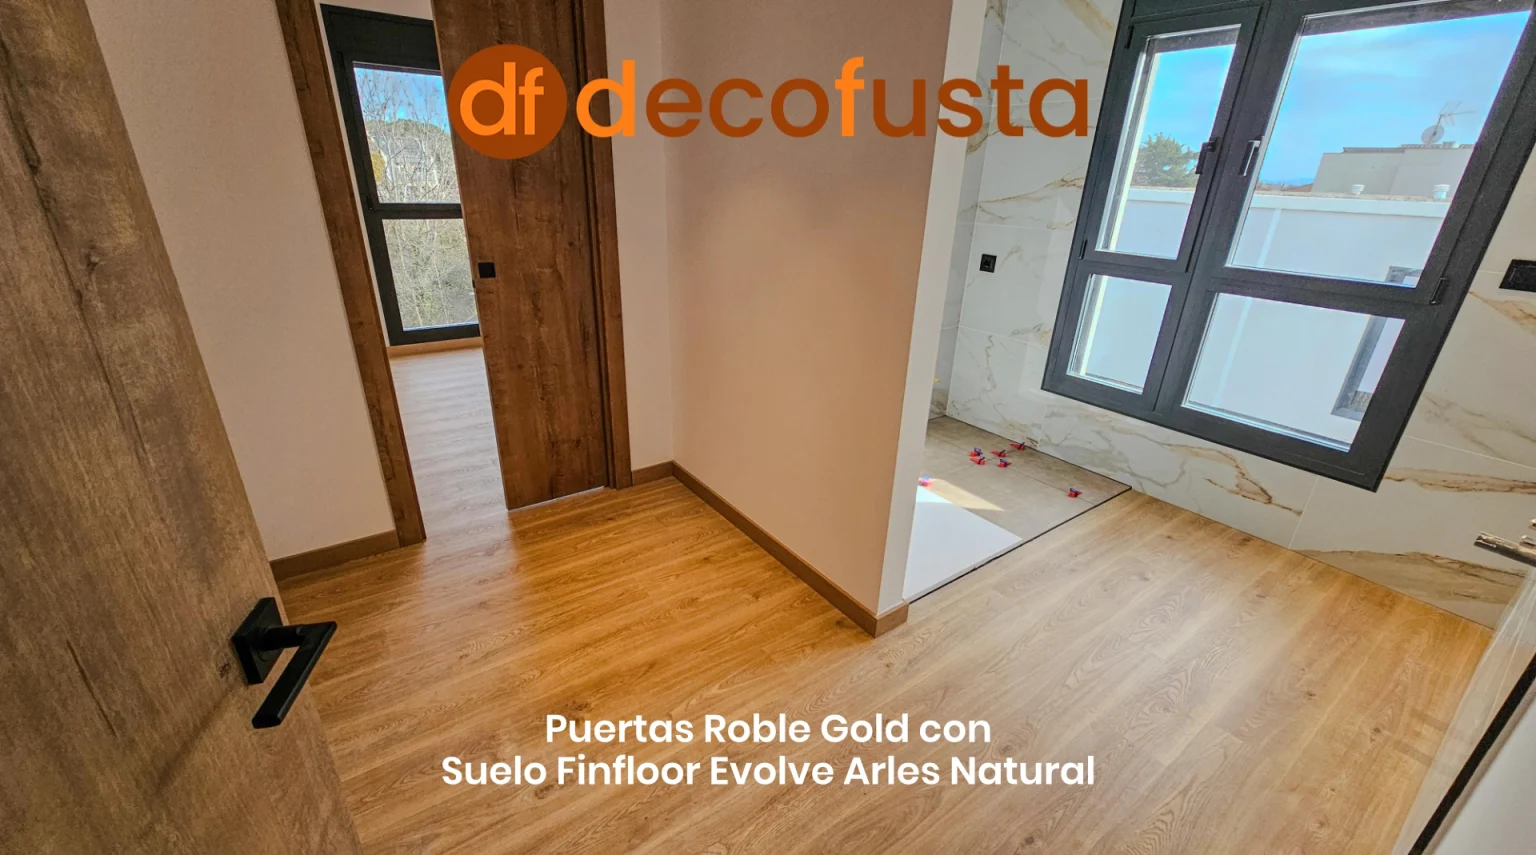 Puertas Roble Gold con Suelo Finfloor Evolve Arles Natural